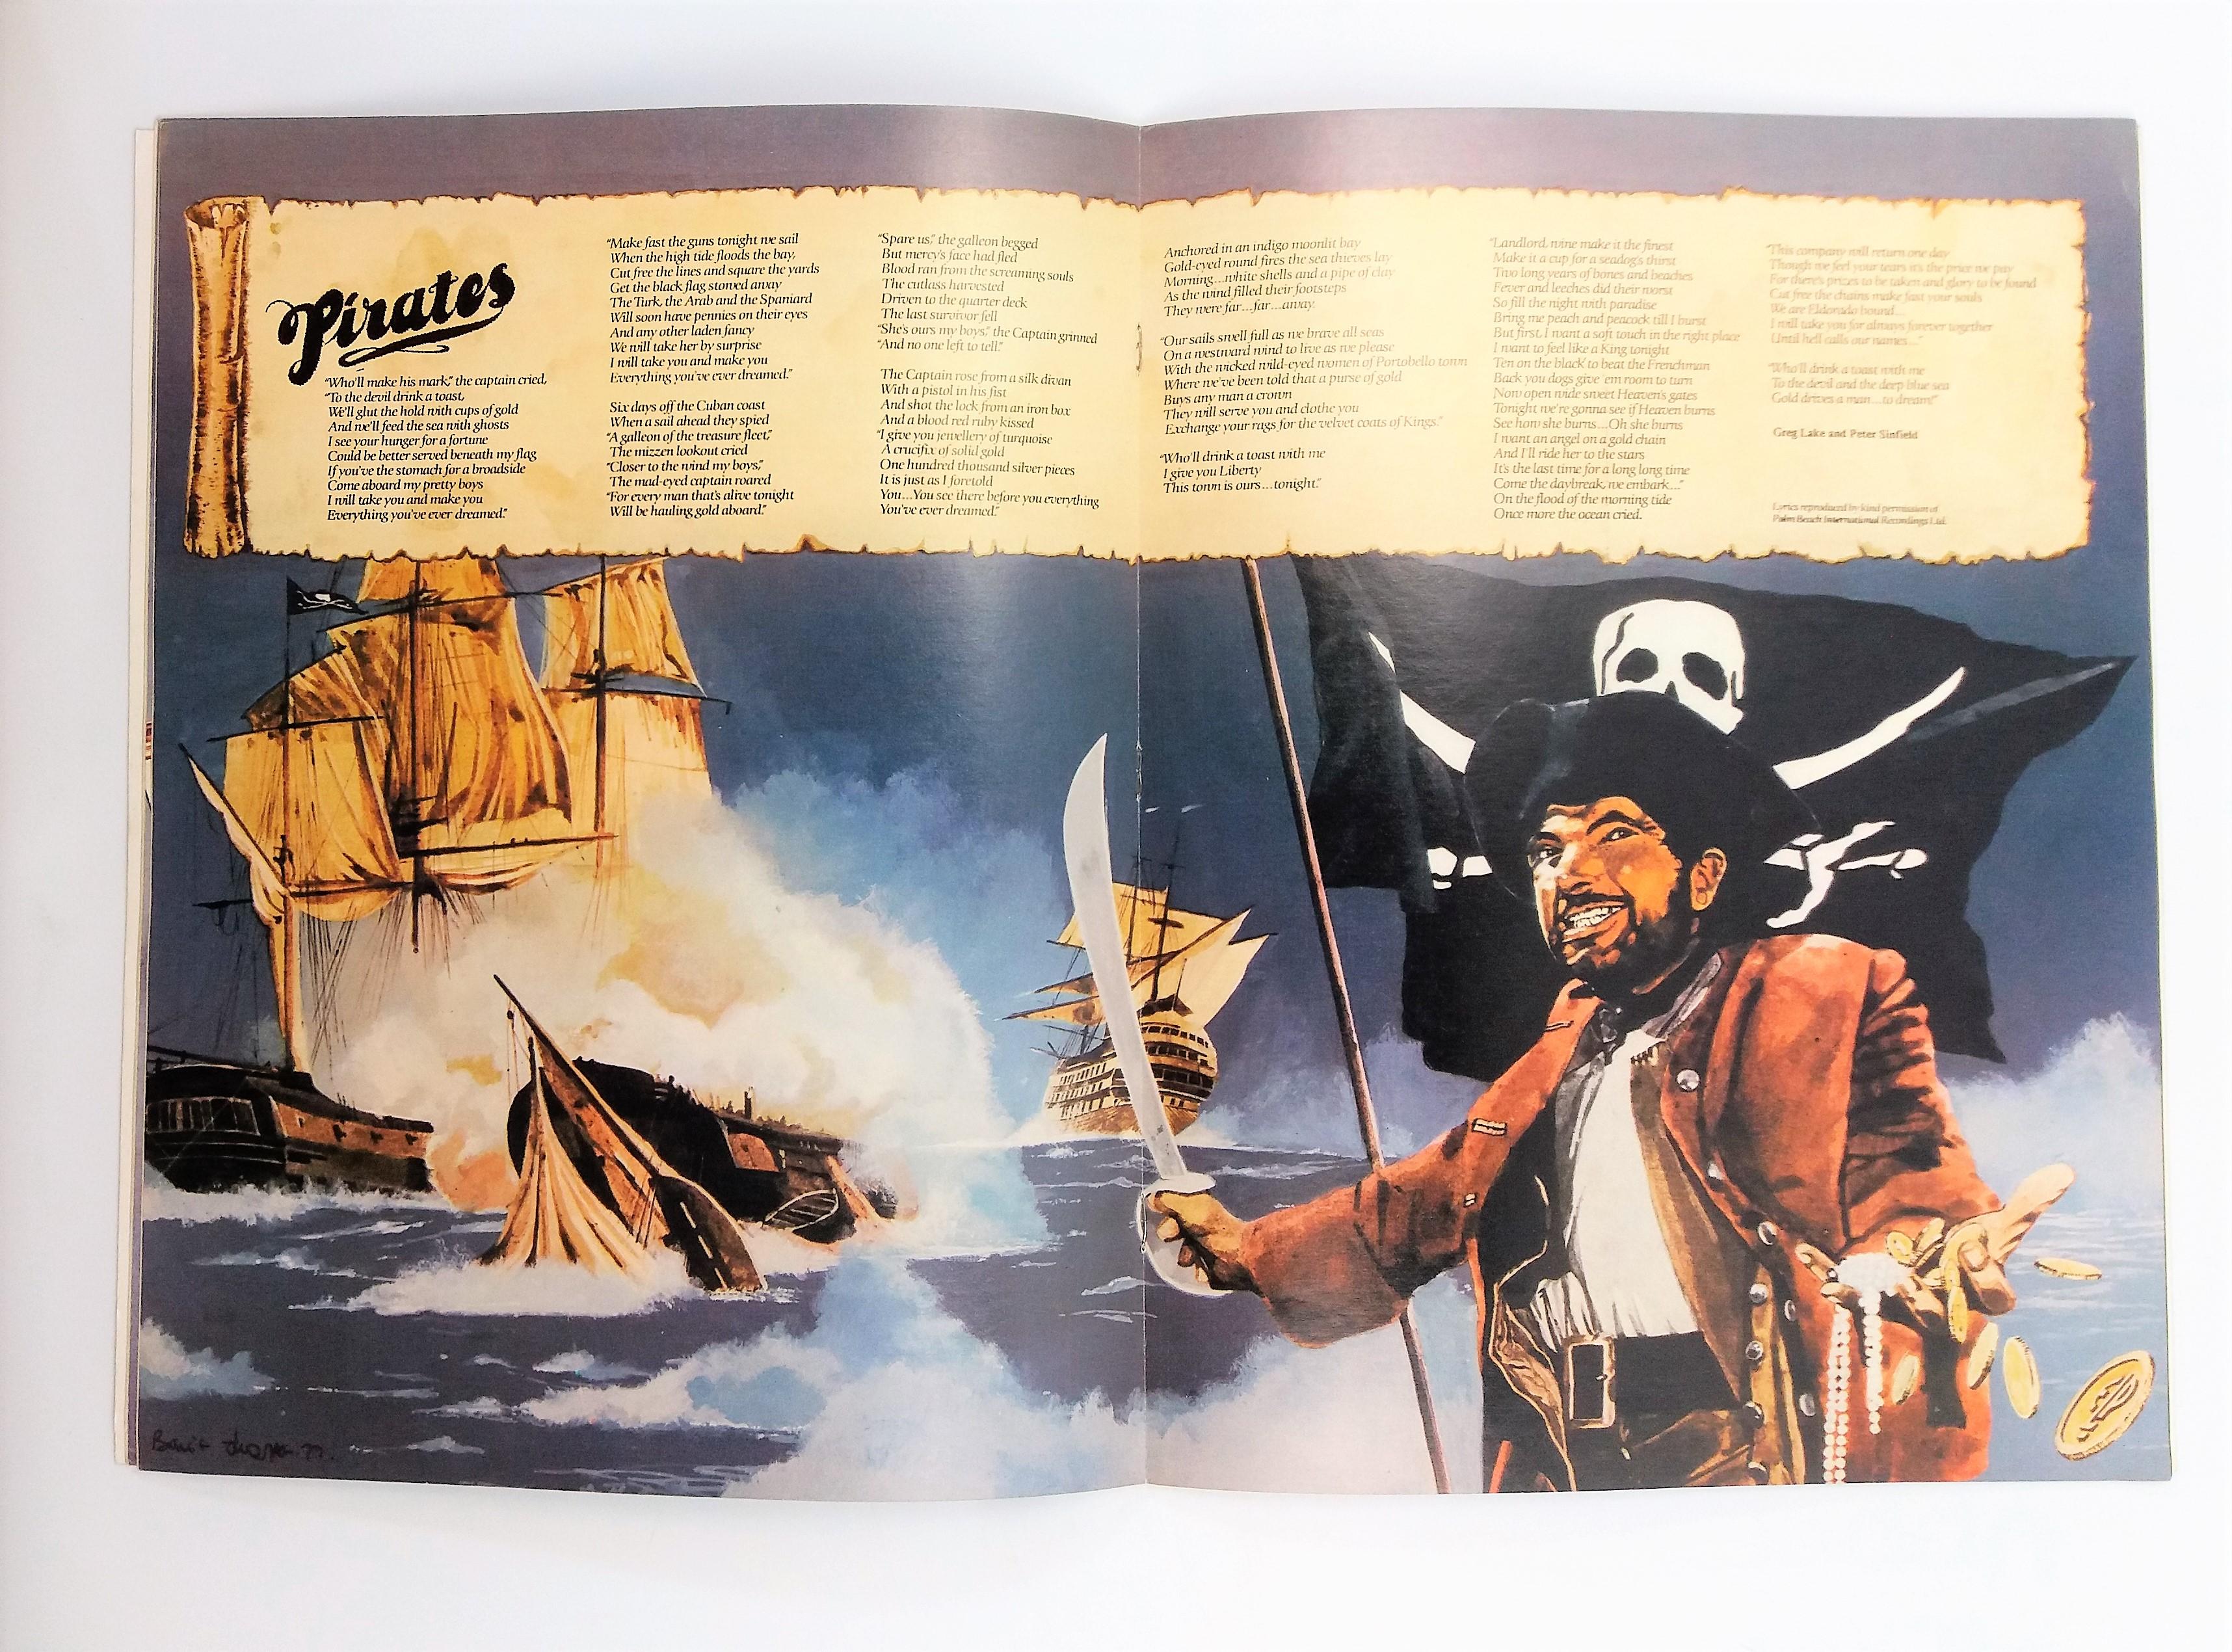 Emerson Lake & Palmer North American Tour 1977 Official Program